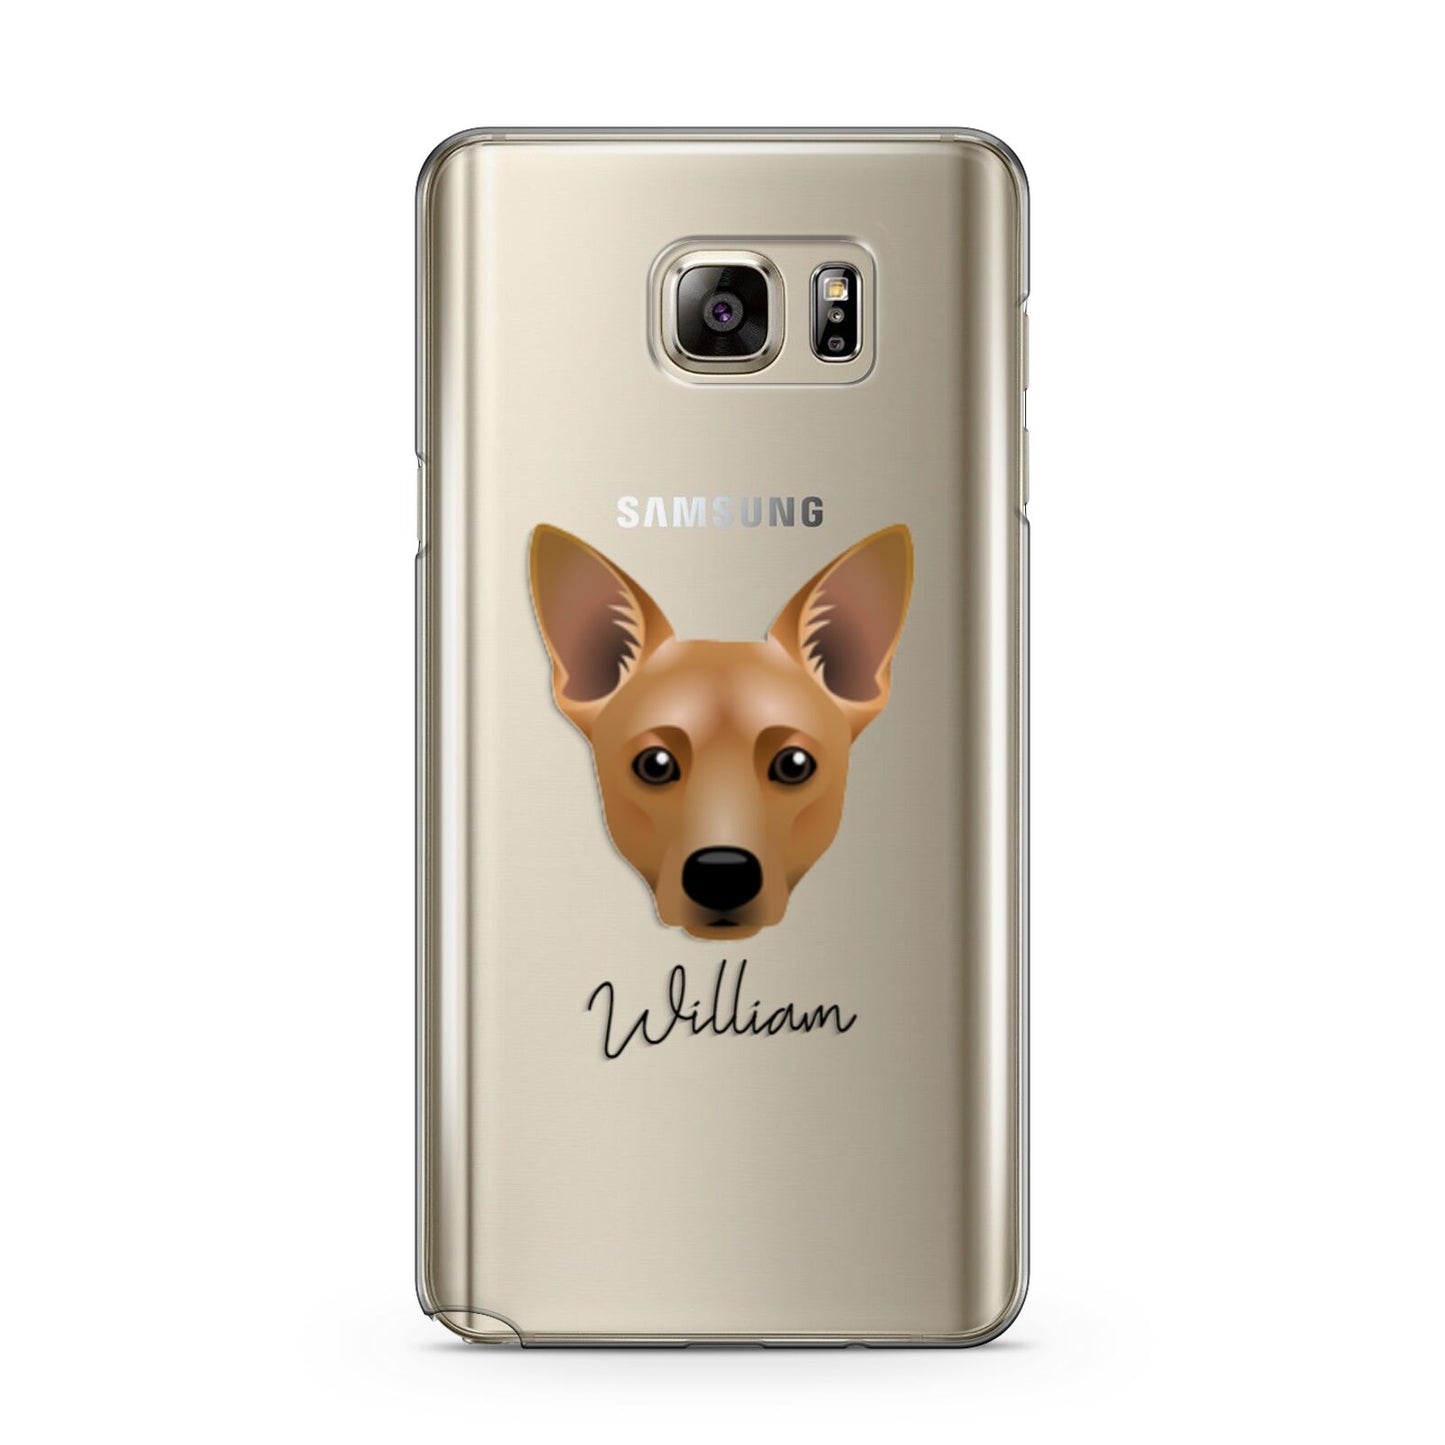 Cojack Personalised Samsung Galaxy Note 5 Case